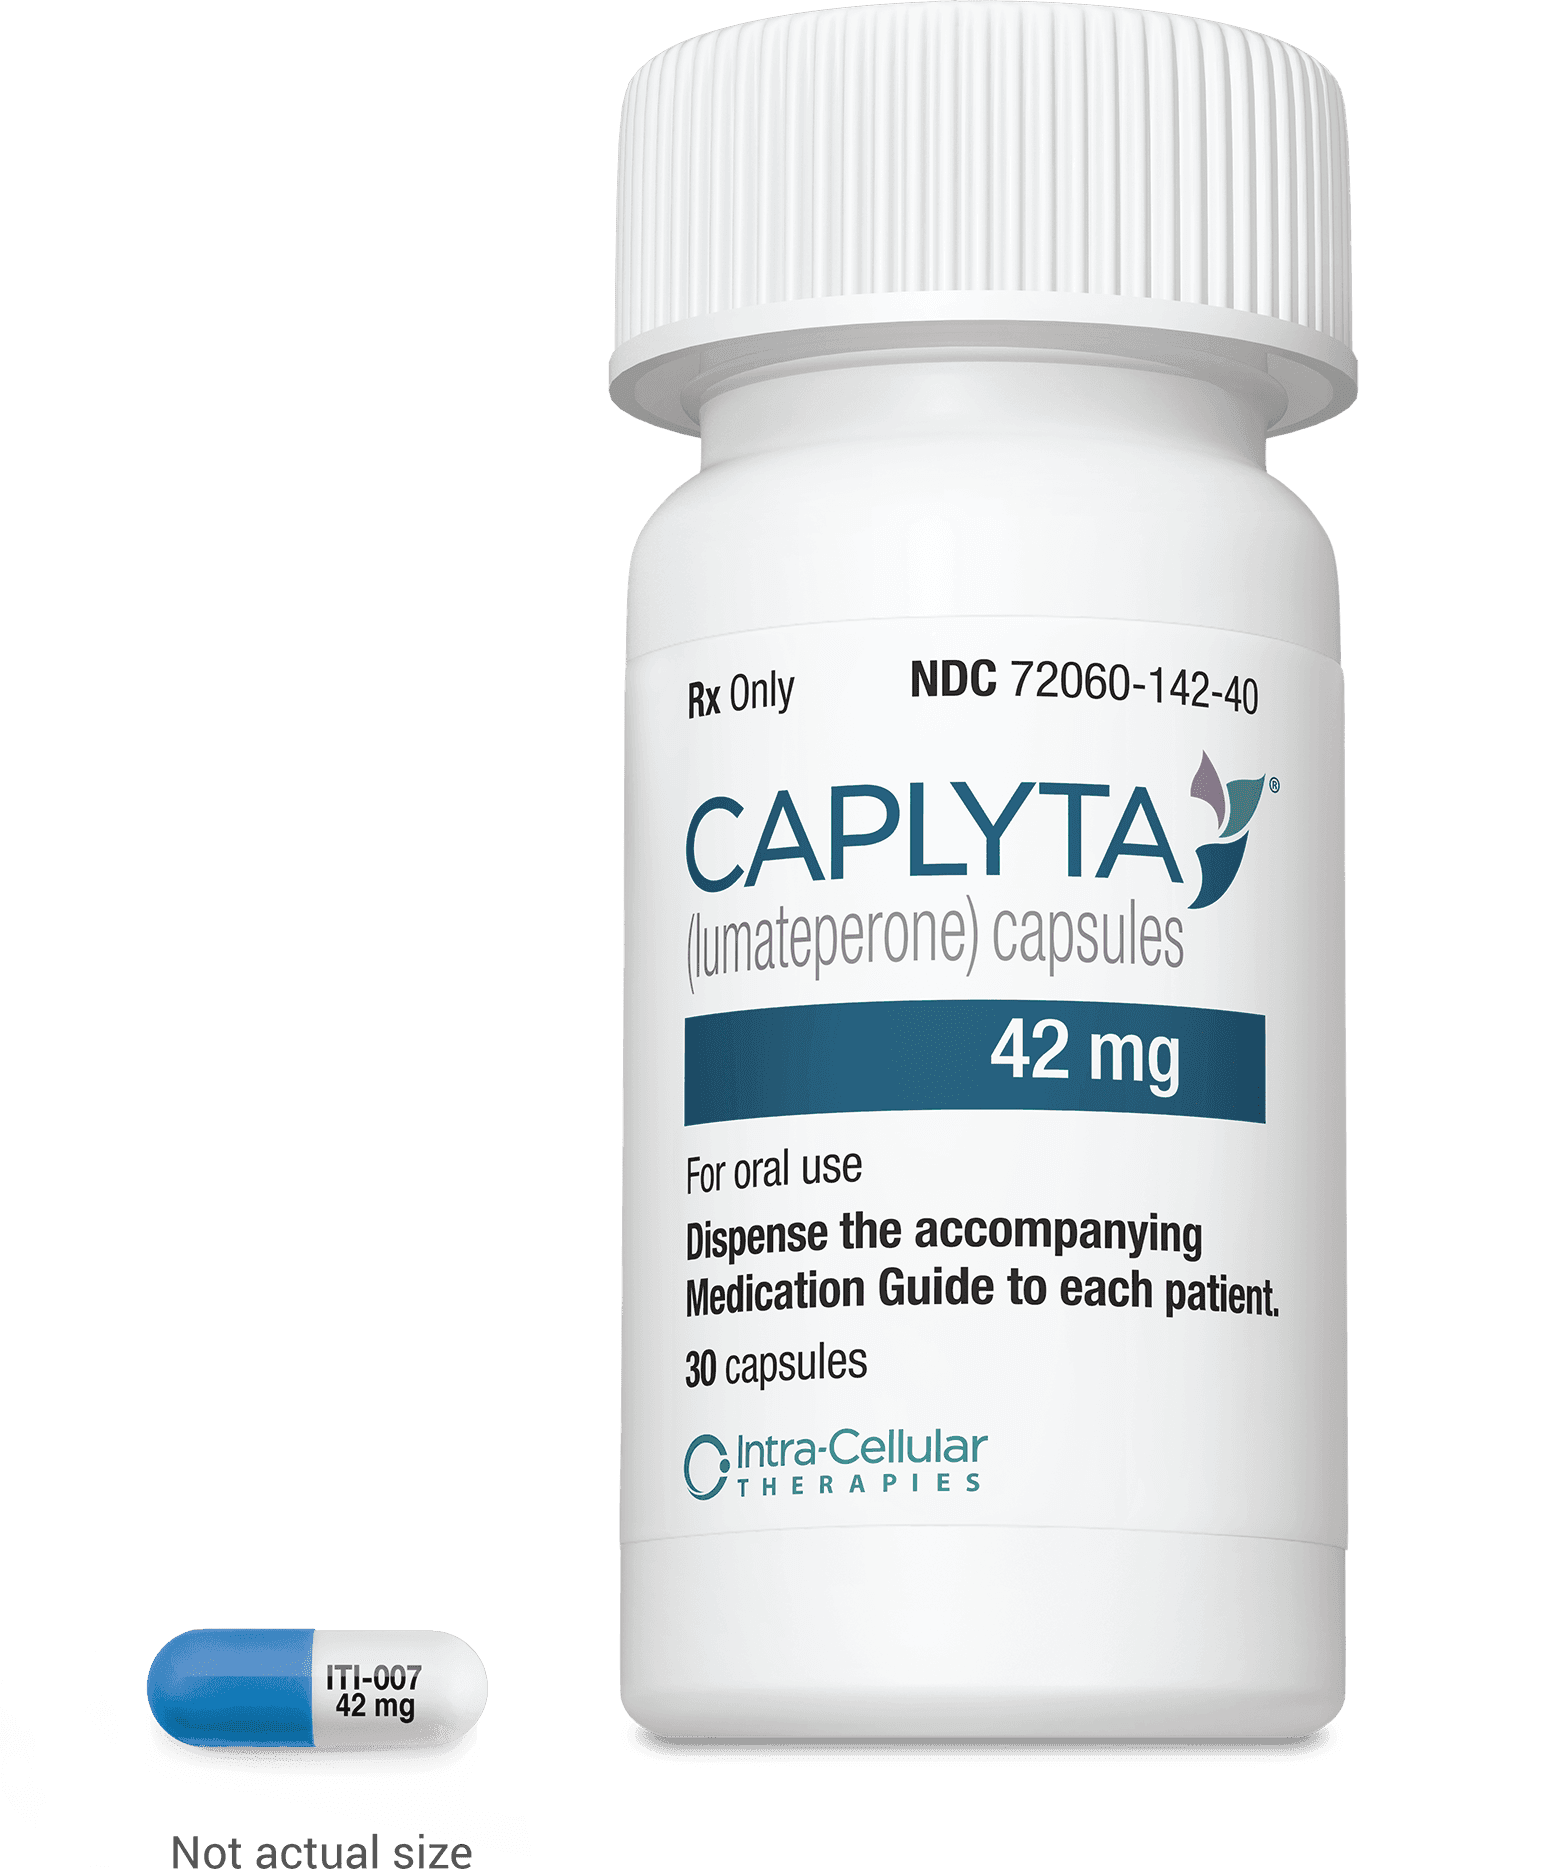 CAPLYTA® (lumateperone) capsules 42 mg product packaging and pill